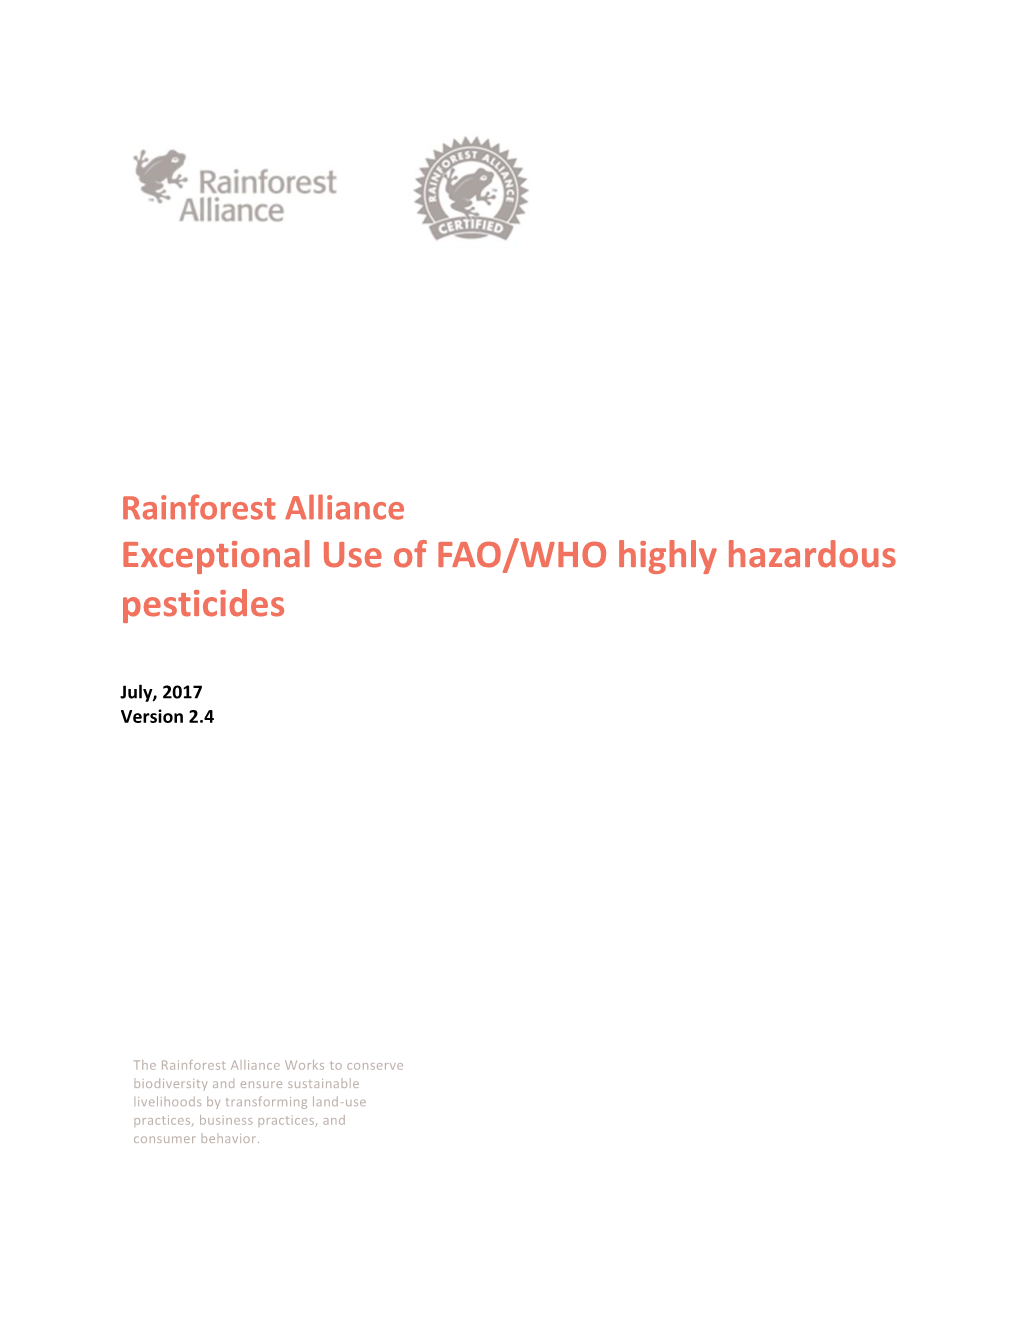 Exceptional Use of FAO/WHO Highly Hazardous Pesticides